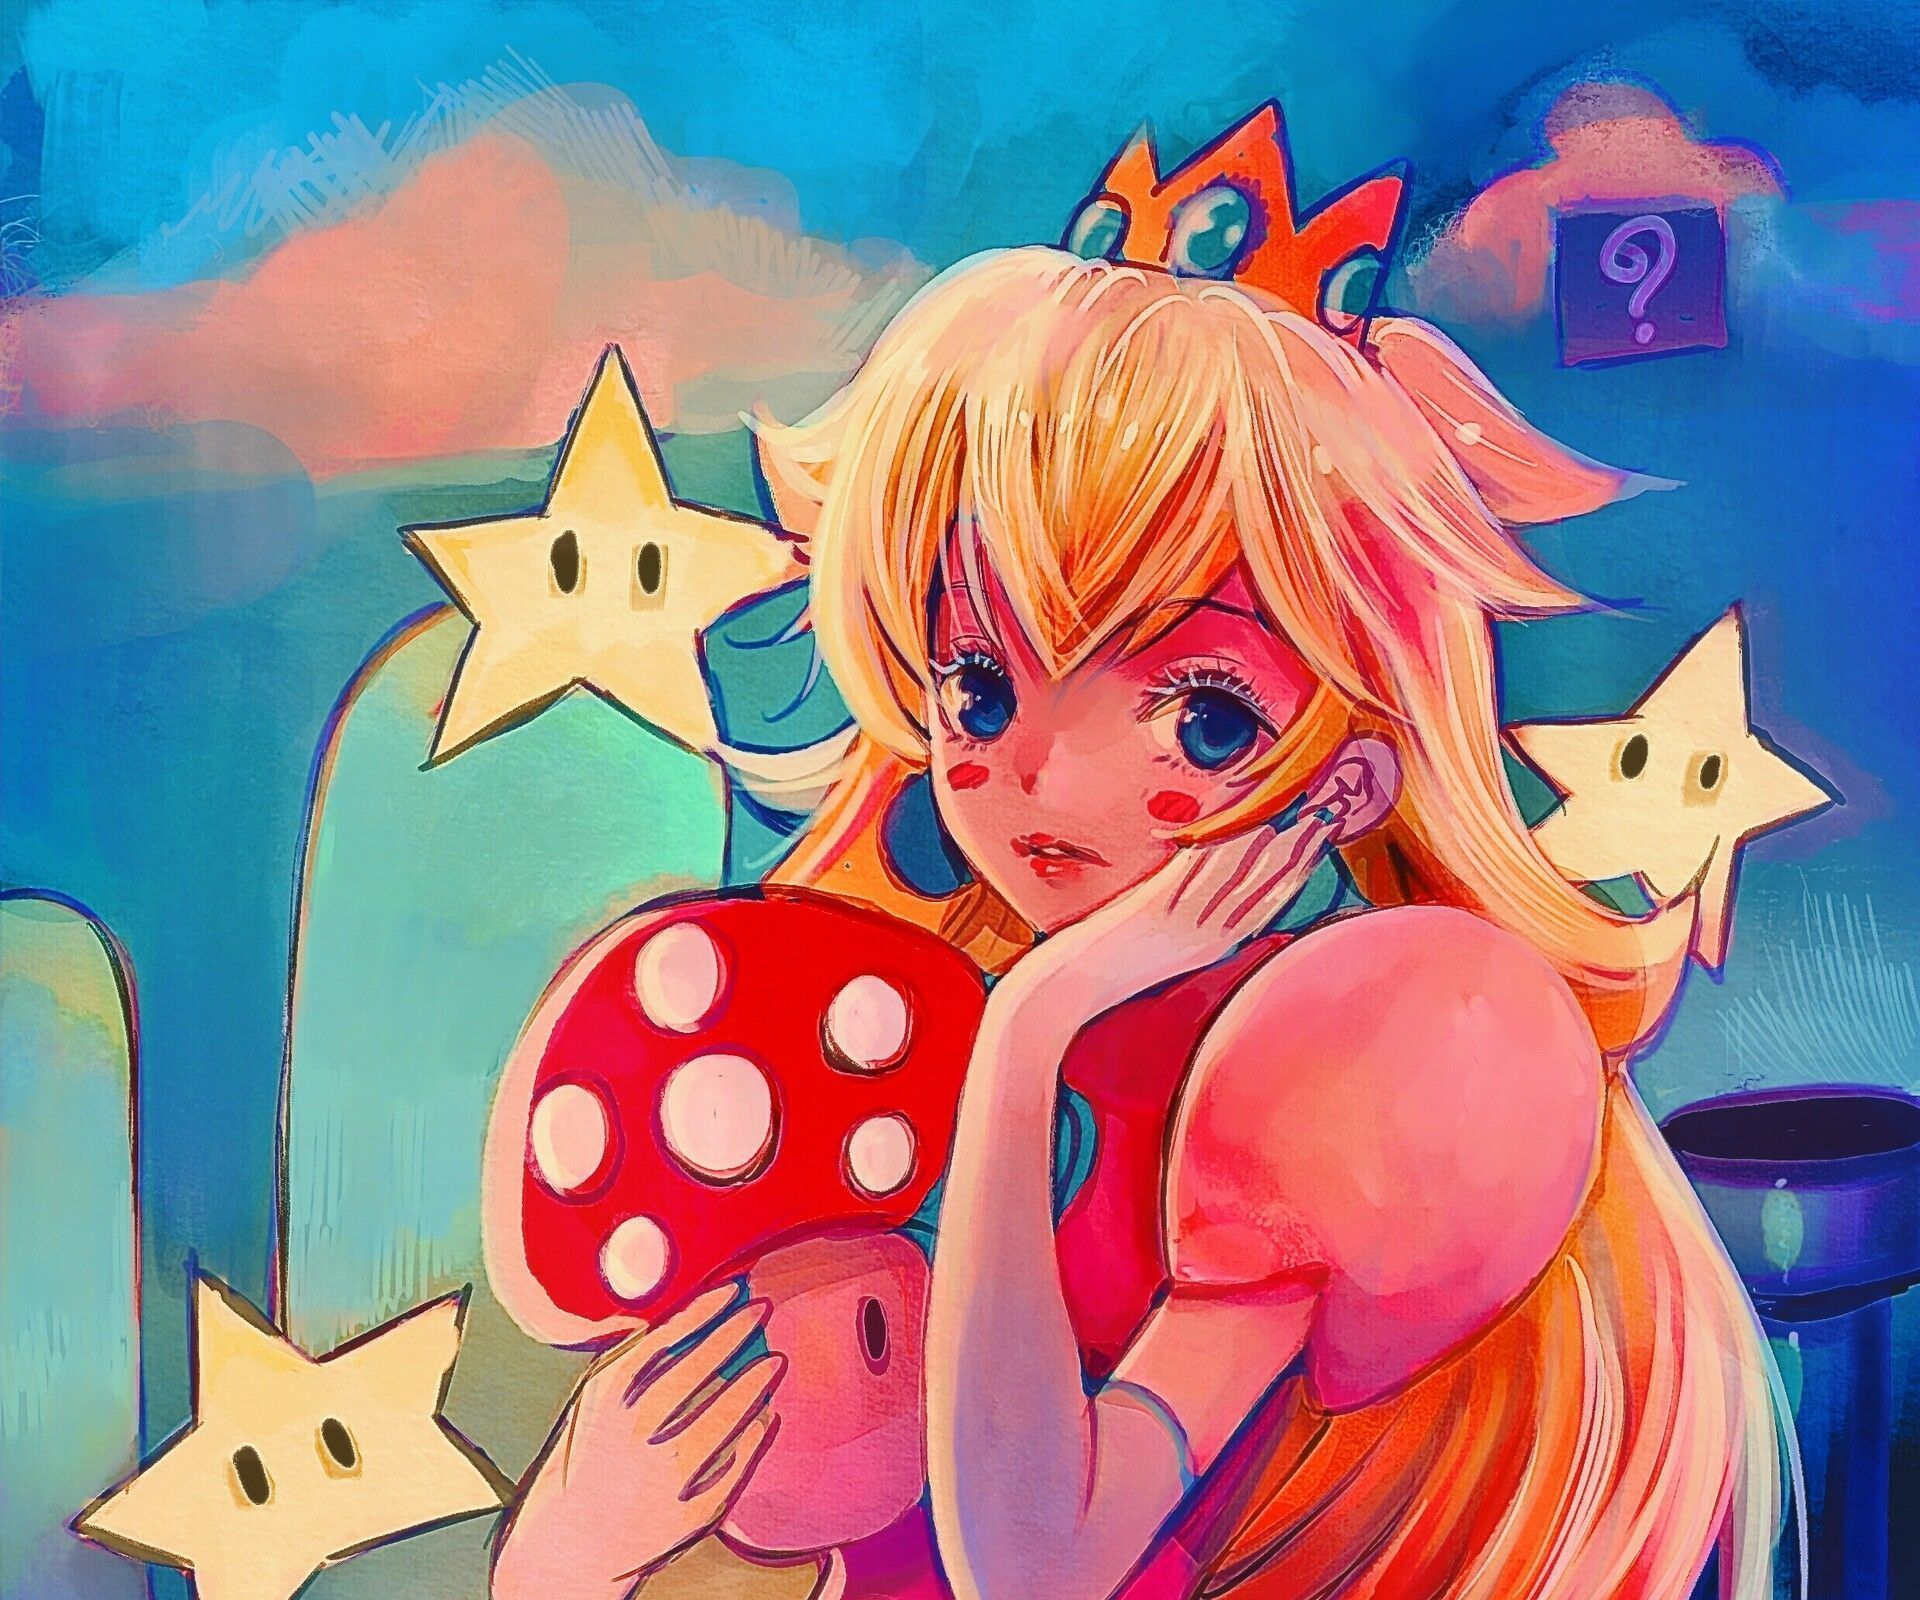 Princess peach, mario, super mario, nintendo, peach, video games, mario bros - Princess Peach